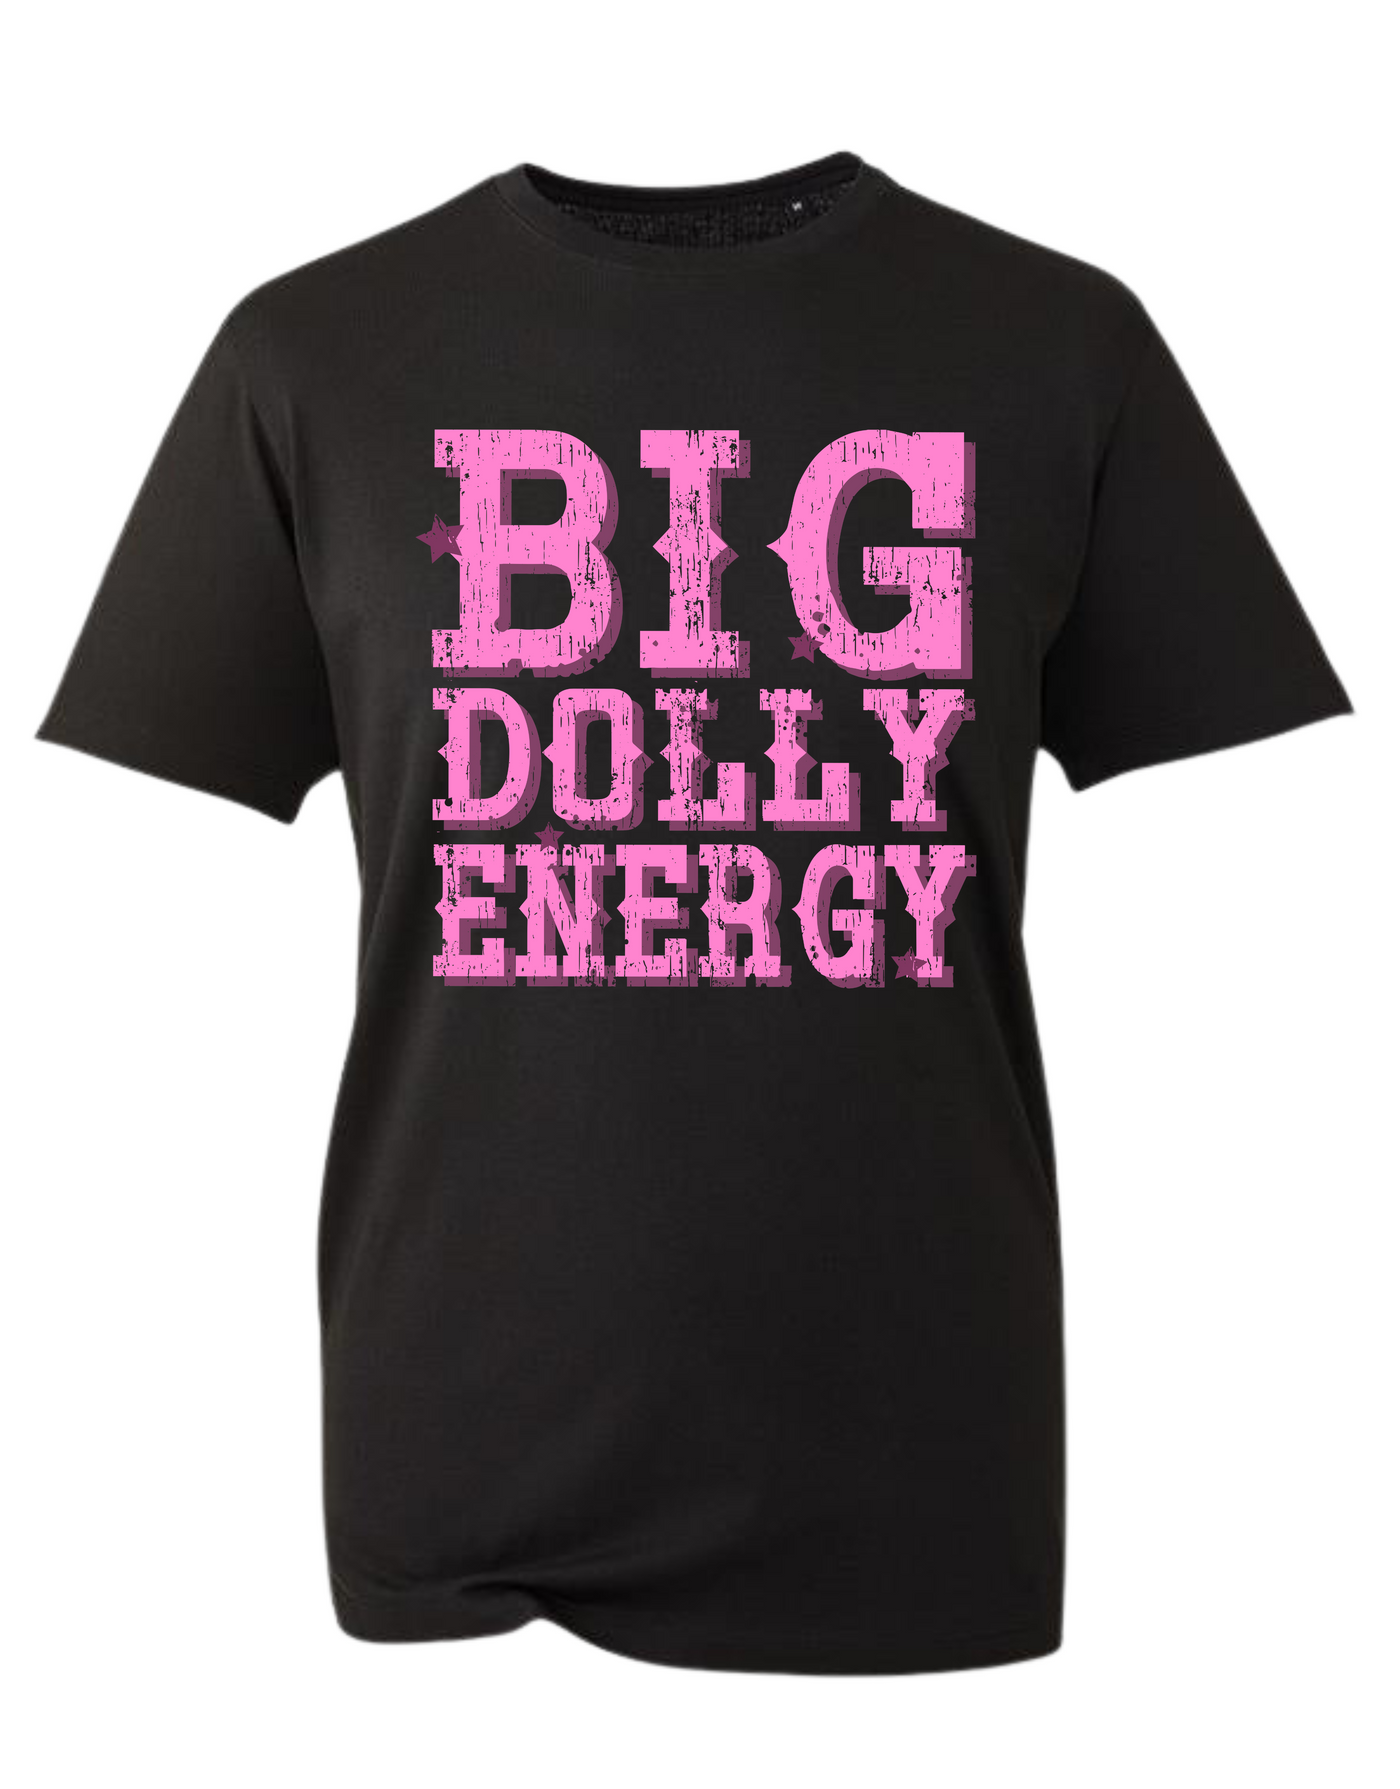 “Big Dolly Energy" Unisex Organic T-Shirt